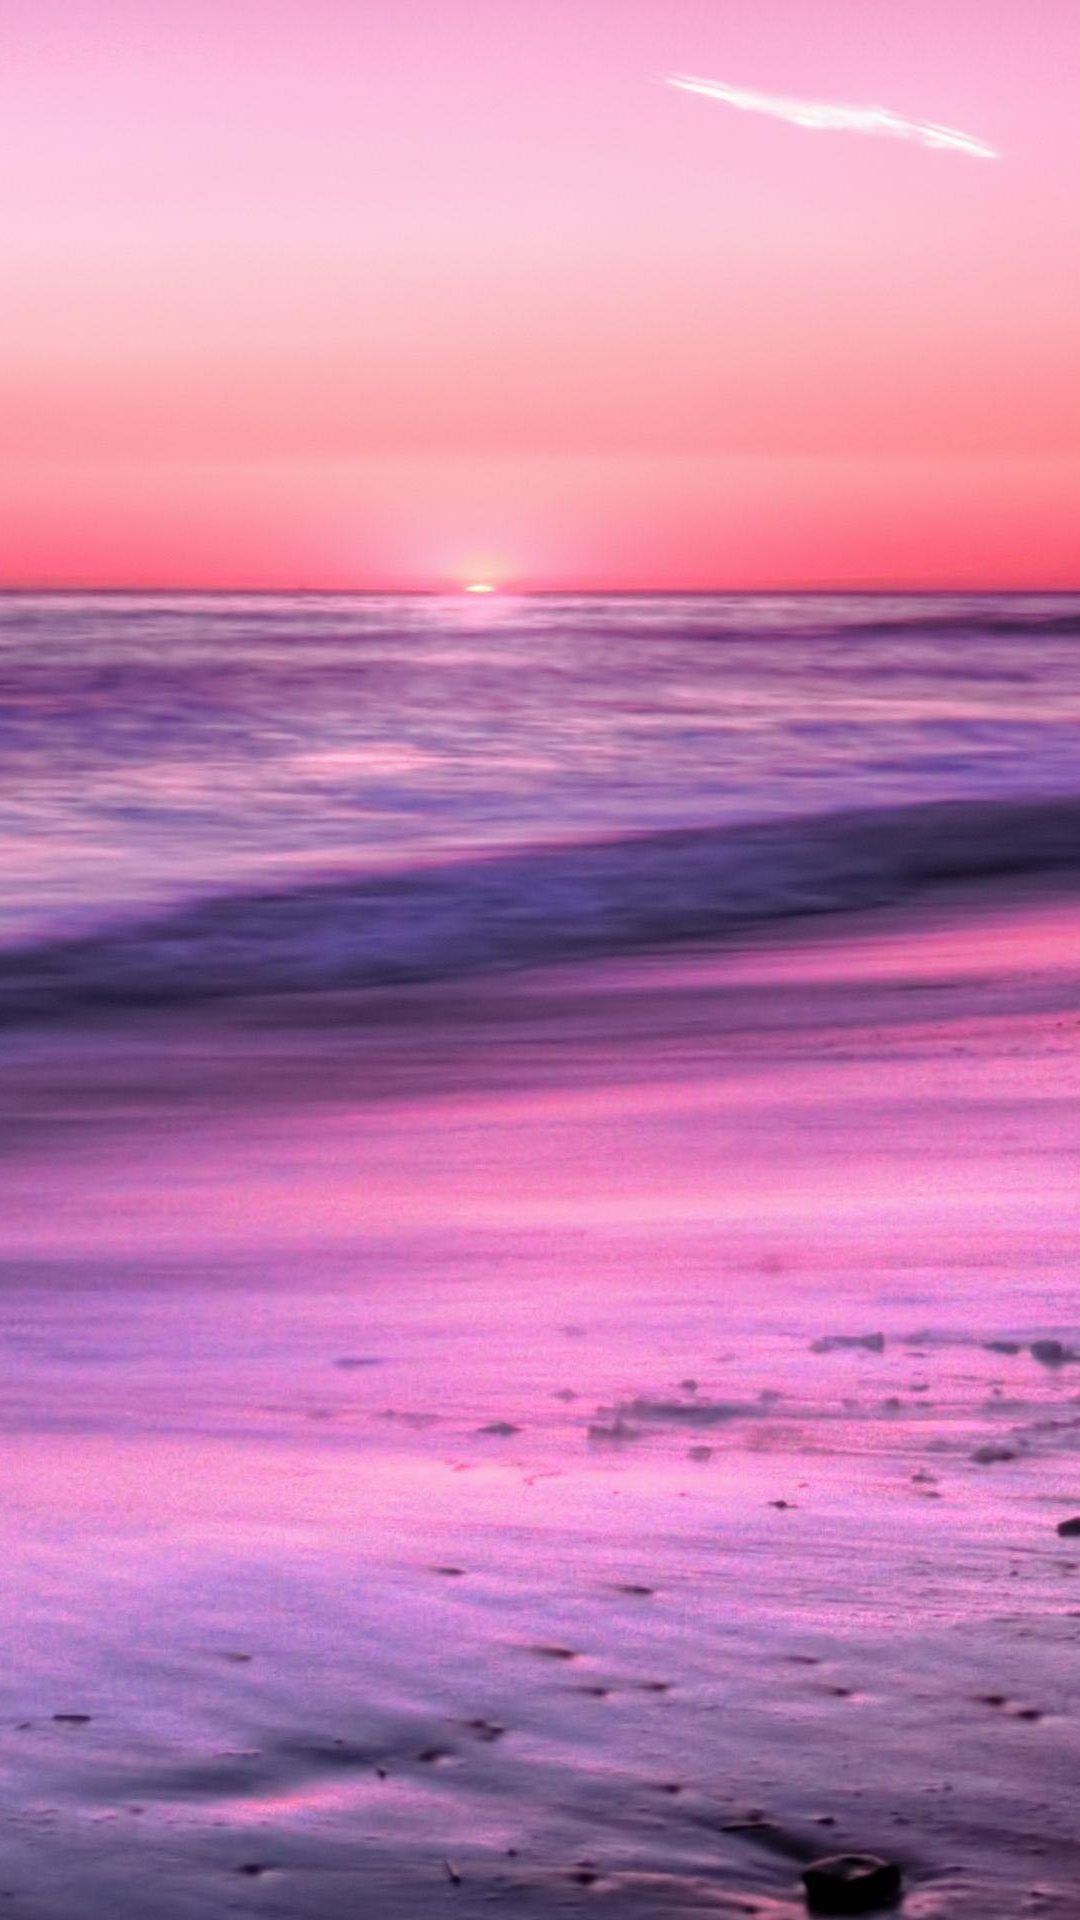 Sunrise Horizon Calm Sea Beach Android Wallpaper free download